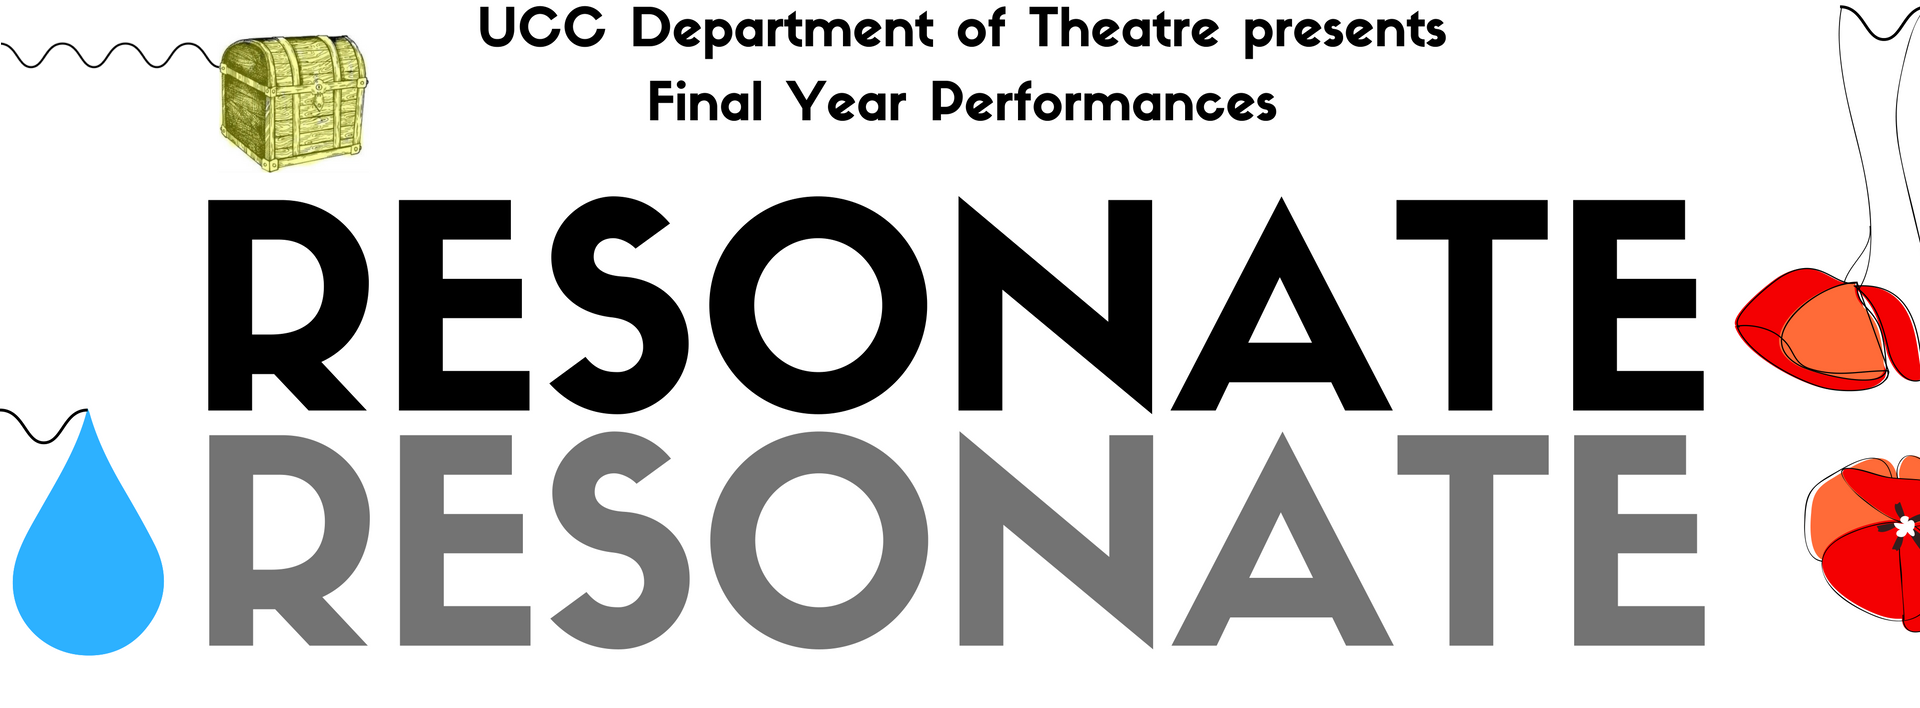 RESONATE - Final Year Performances in Firkin Crane